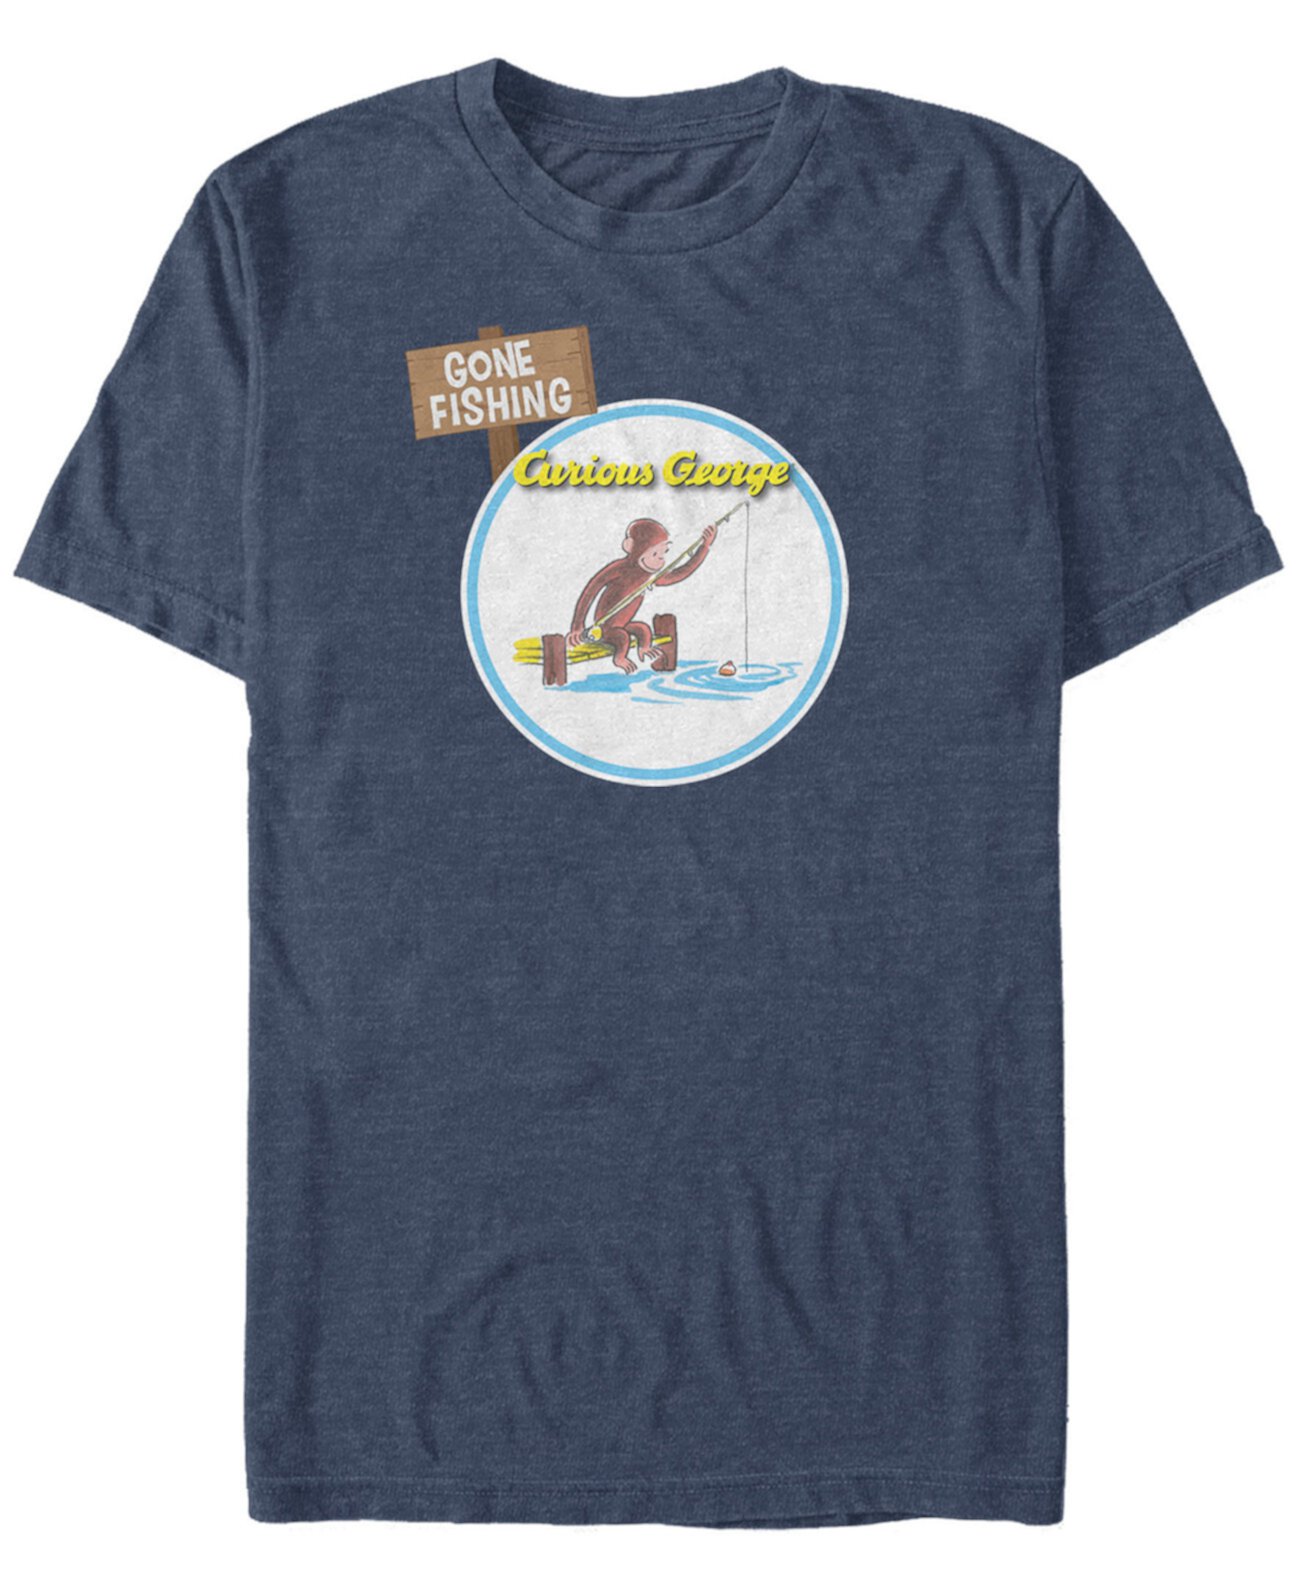 Мужская футболка с коротким рукавом George Gone Fishing Curious George